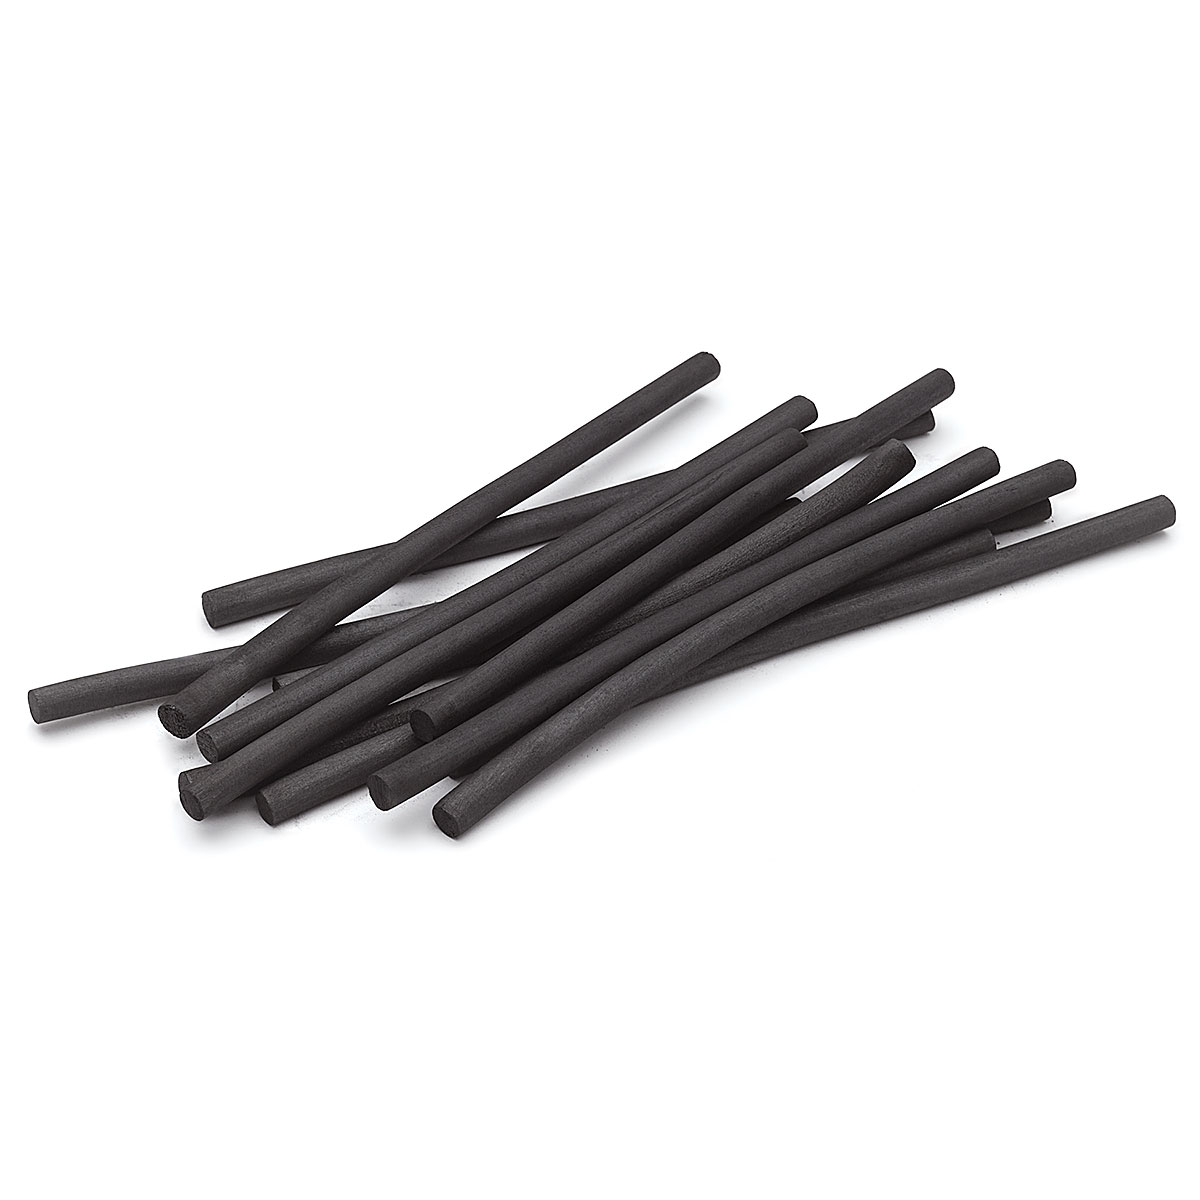 Medium Thin Vine Charcoal Sticks, Hobby Lobby